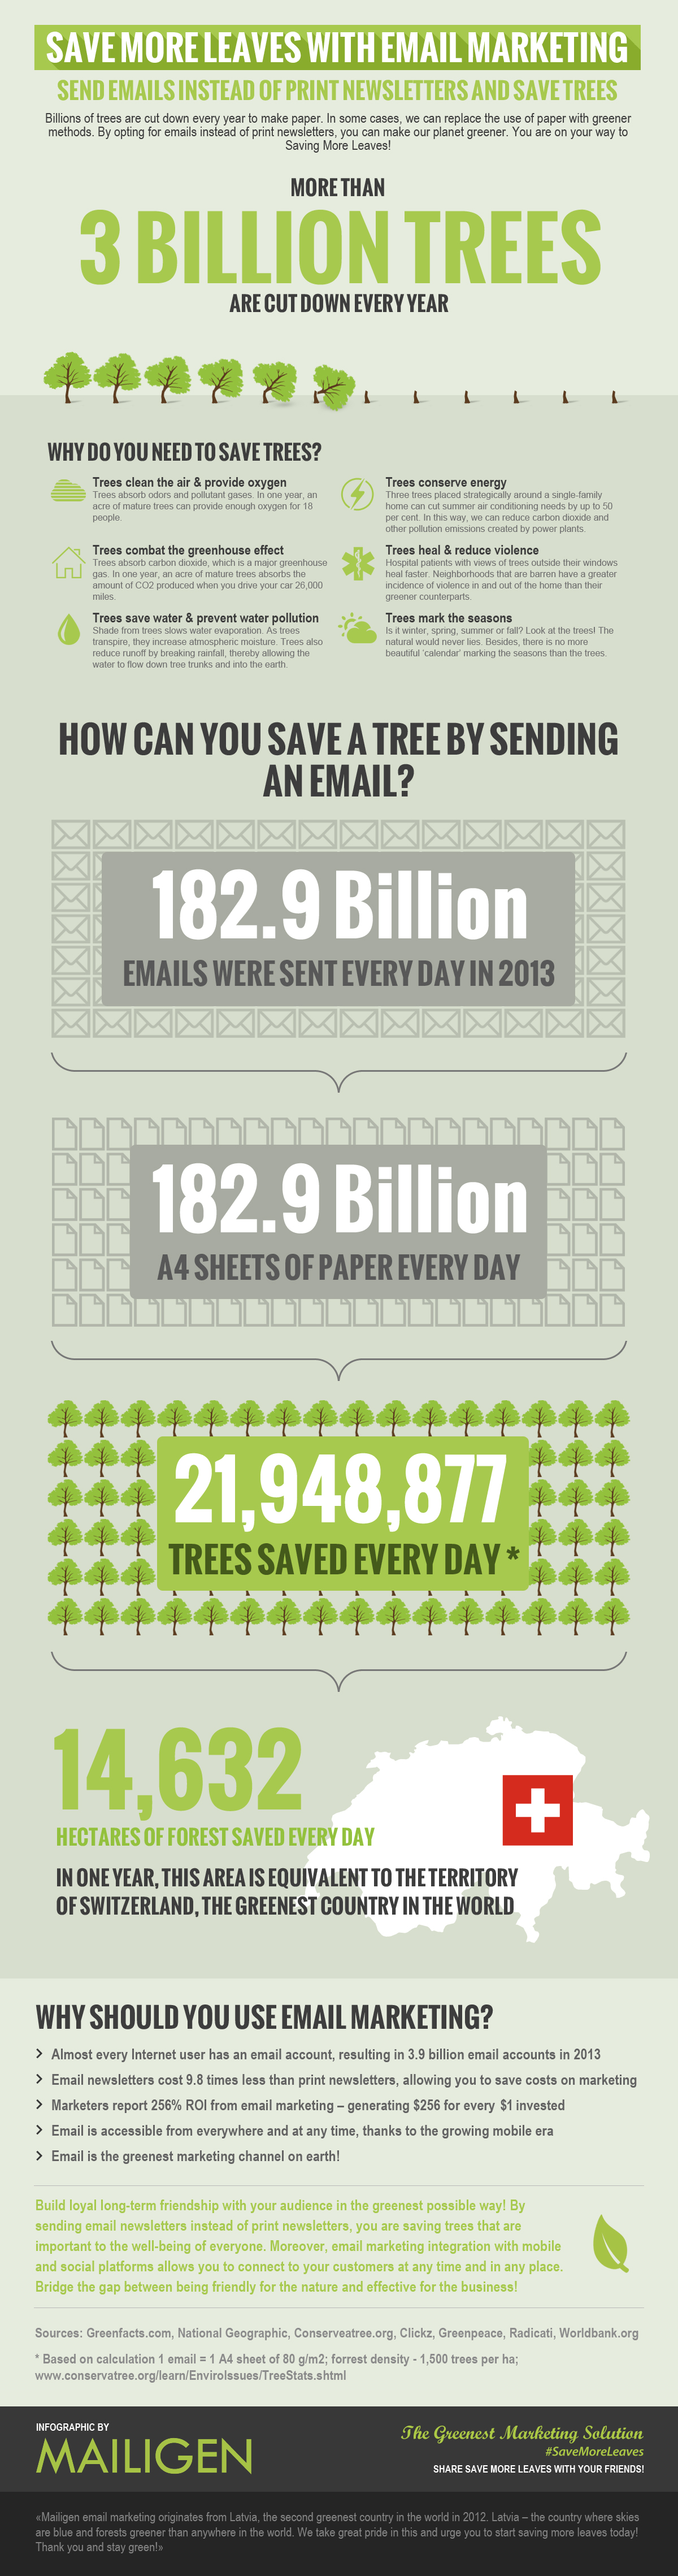 Mailigen Infographic Save More Leaves